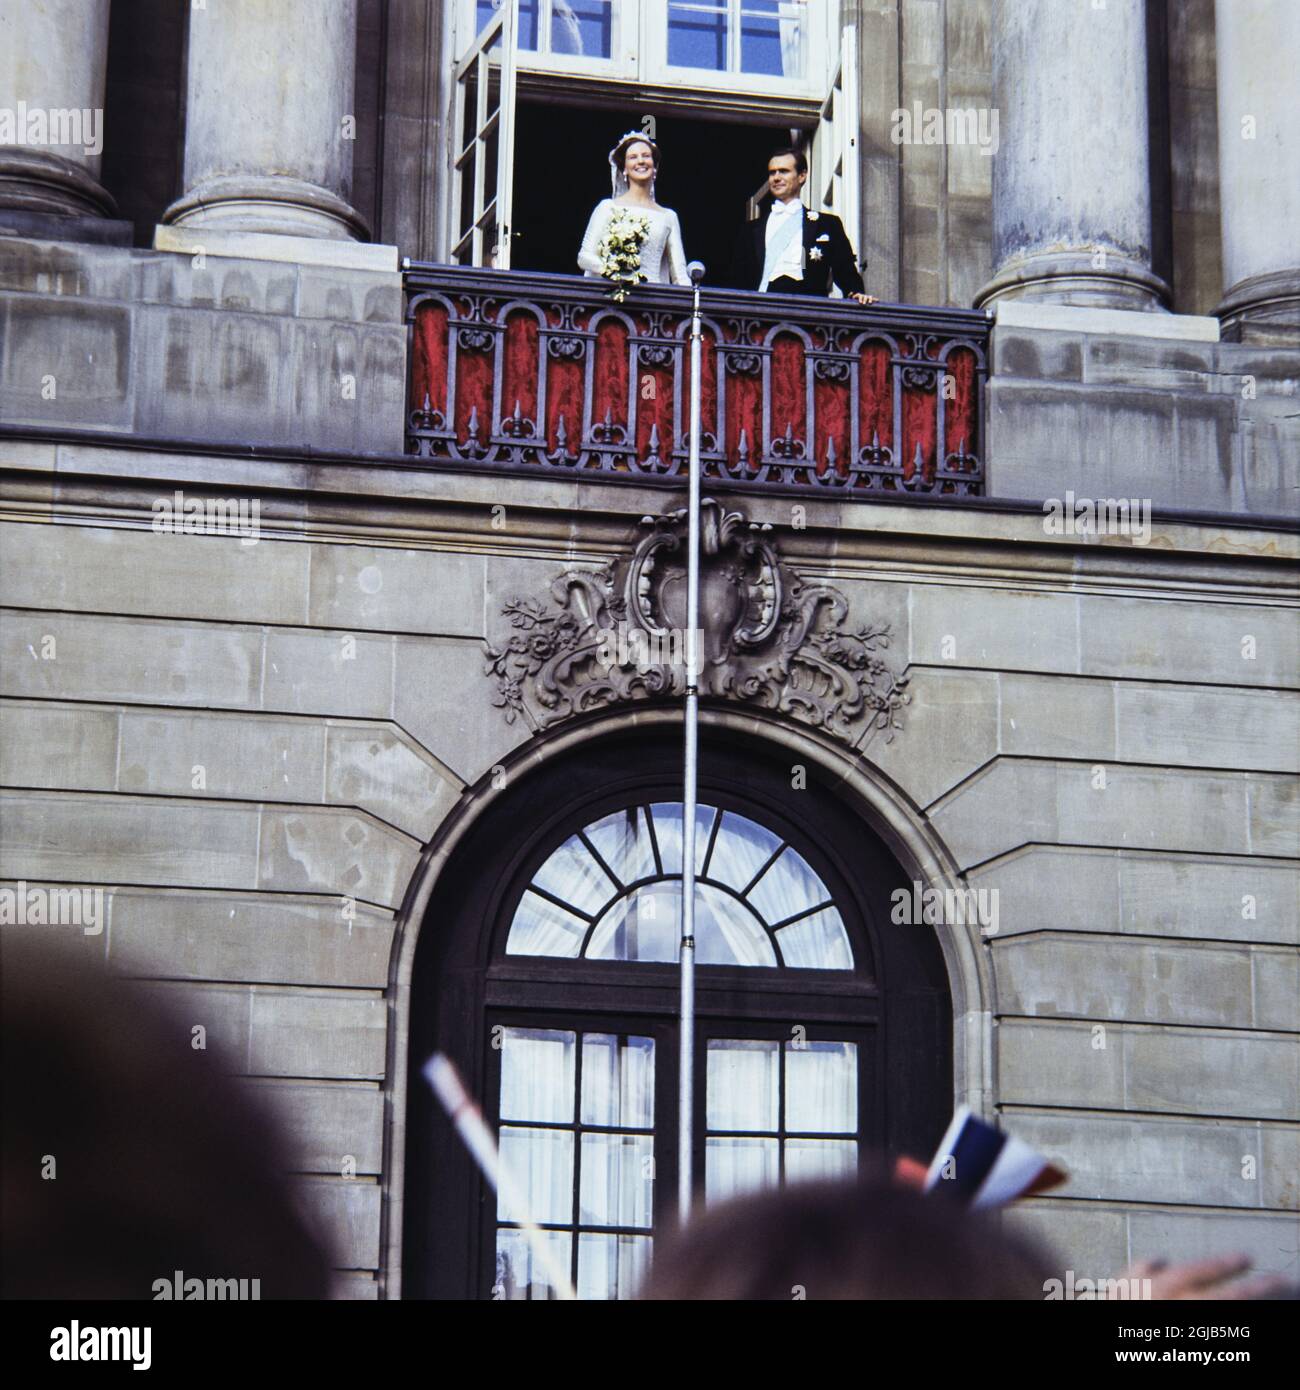 KÃ–PENHAMN 1967-06-10 matrimonio della regina Margrethe II di Danimarca e del principe henrik Henrik al palazzo di Amalienborg Foto: Christer Kindahl / Kamerabild / TT / Kod: 3019 Foto Stock